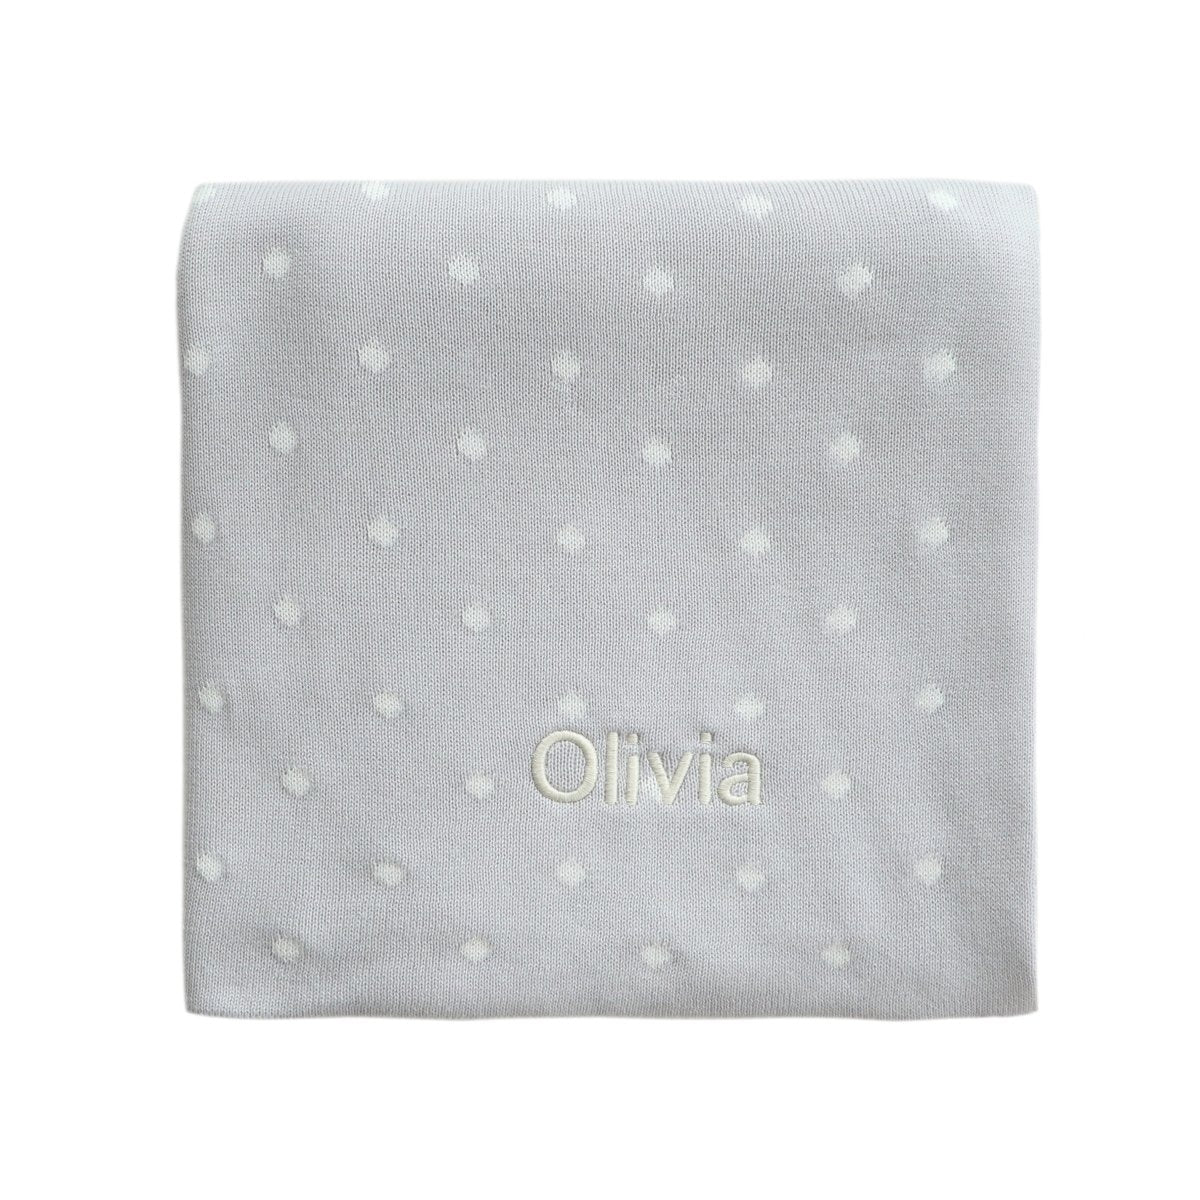 Personalised Polka Dot Blanket - Grey - LOVINGLY SIGNED (HK)